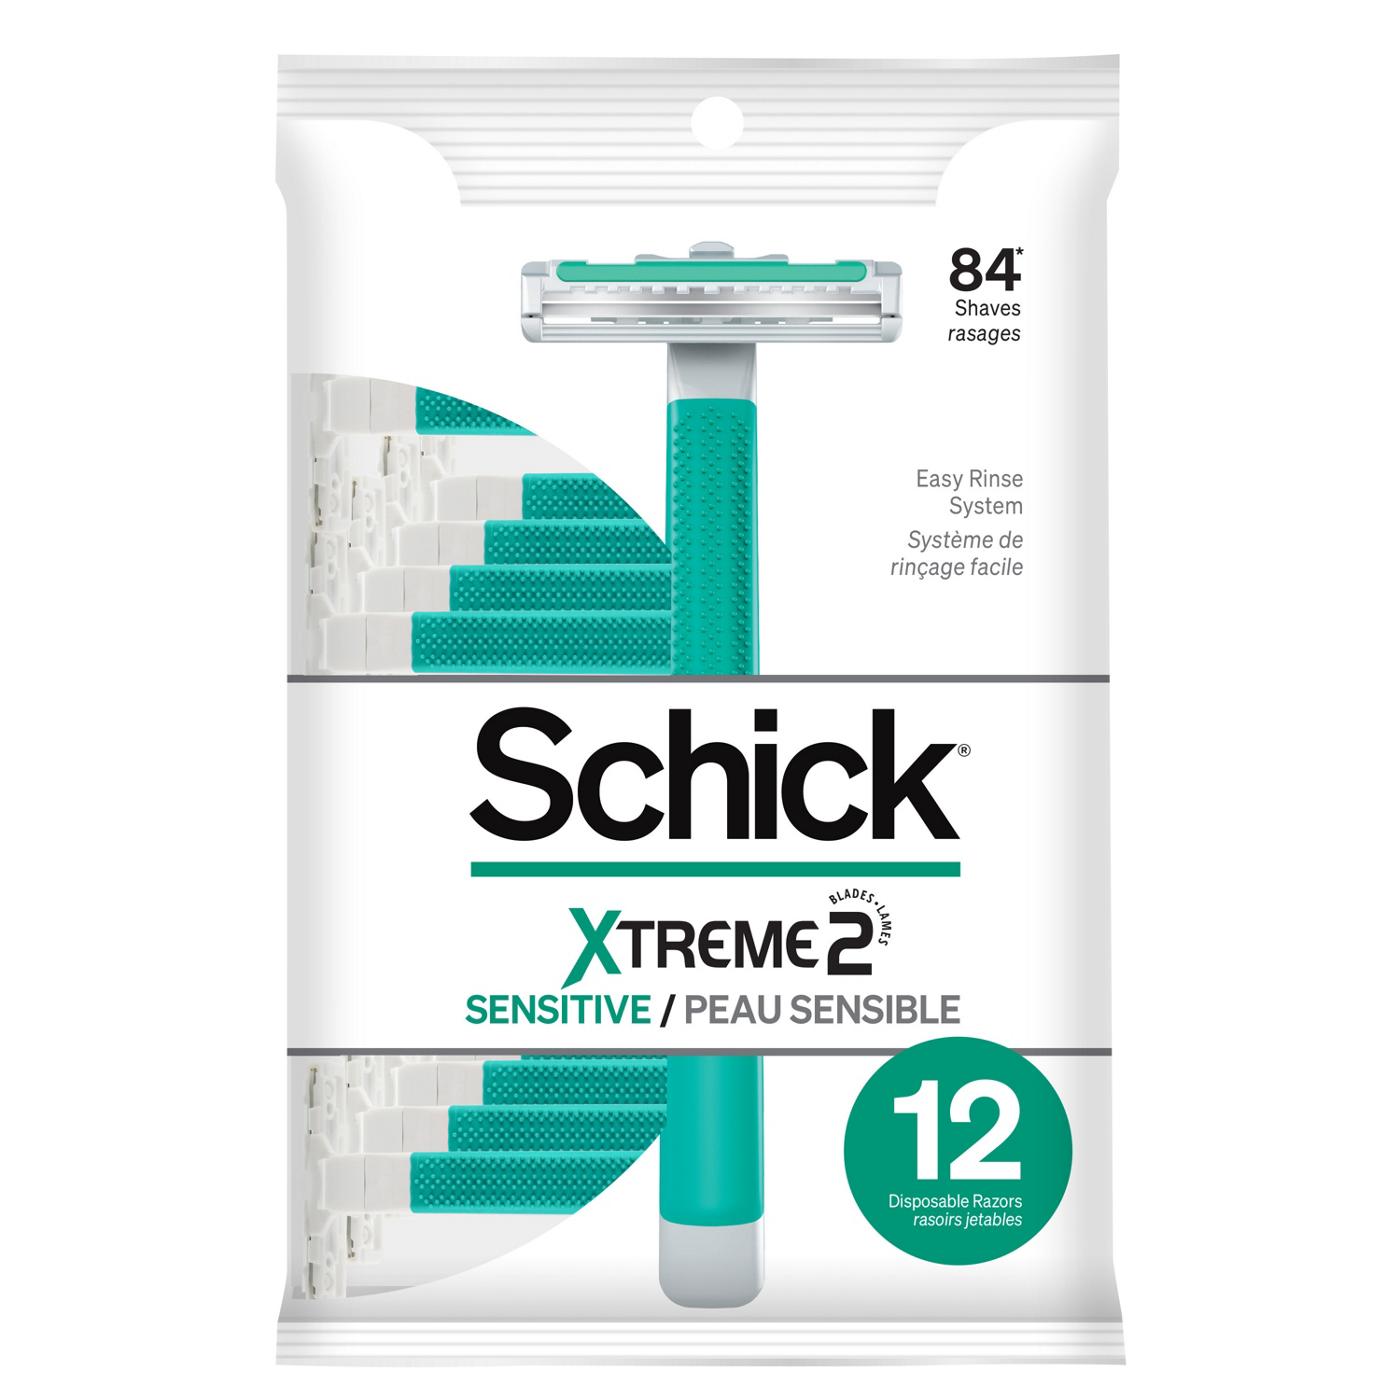 Schick Xtreme 2 Sensitive Disposable Razors; image 1 of 6